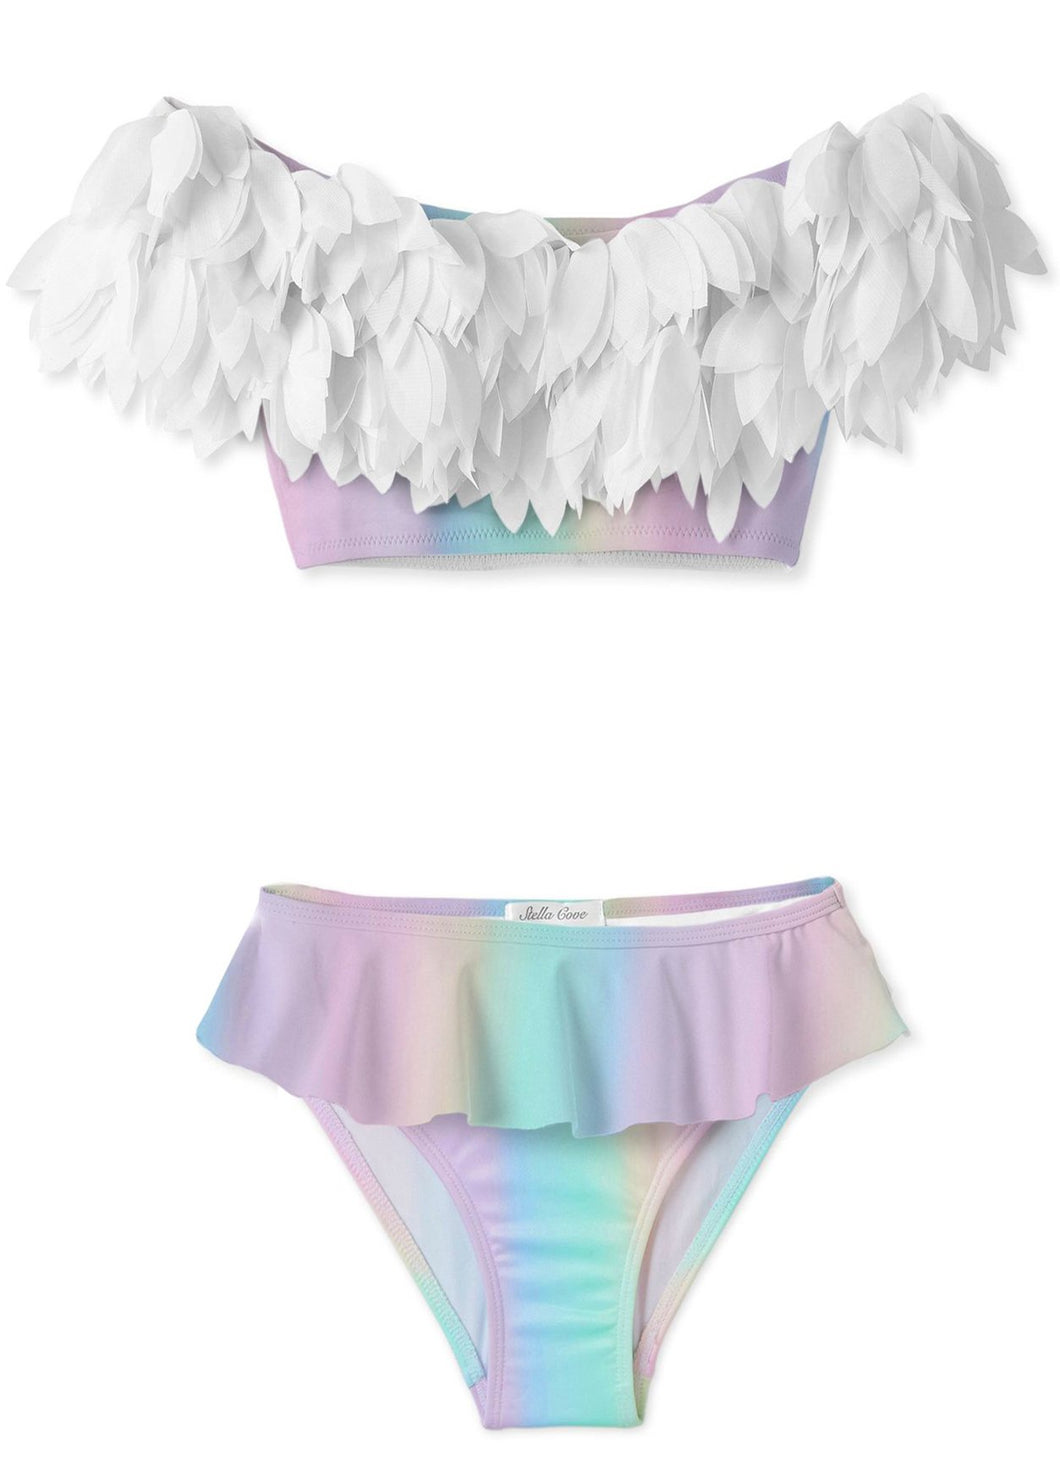 Rainbow Full Shoulder Bikini With White Petals